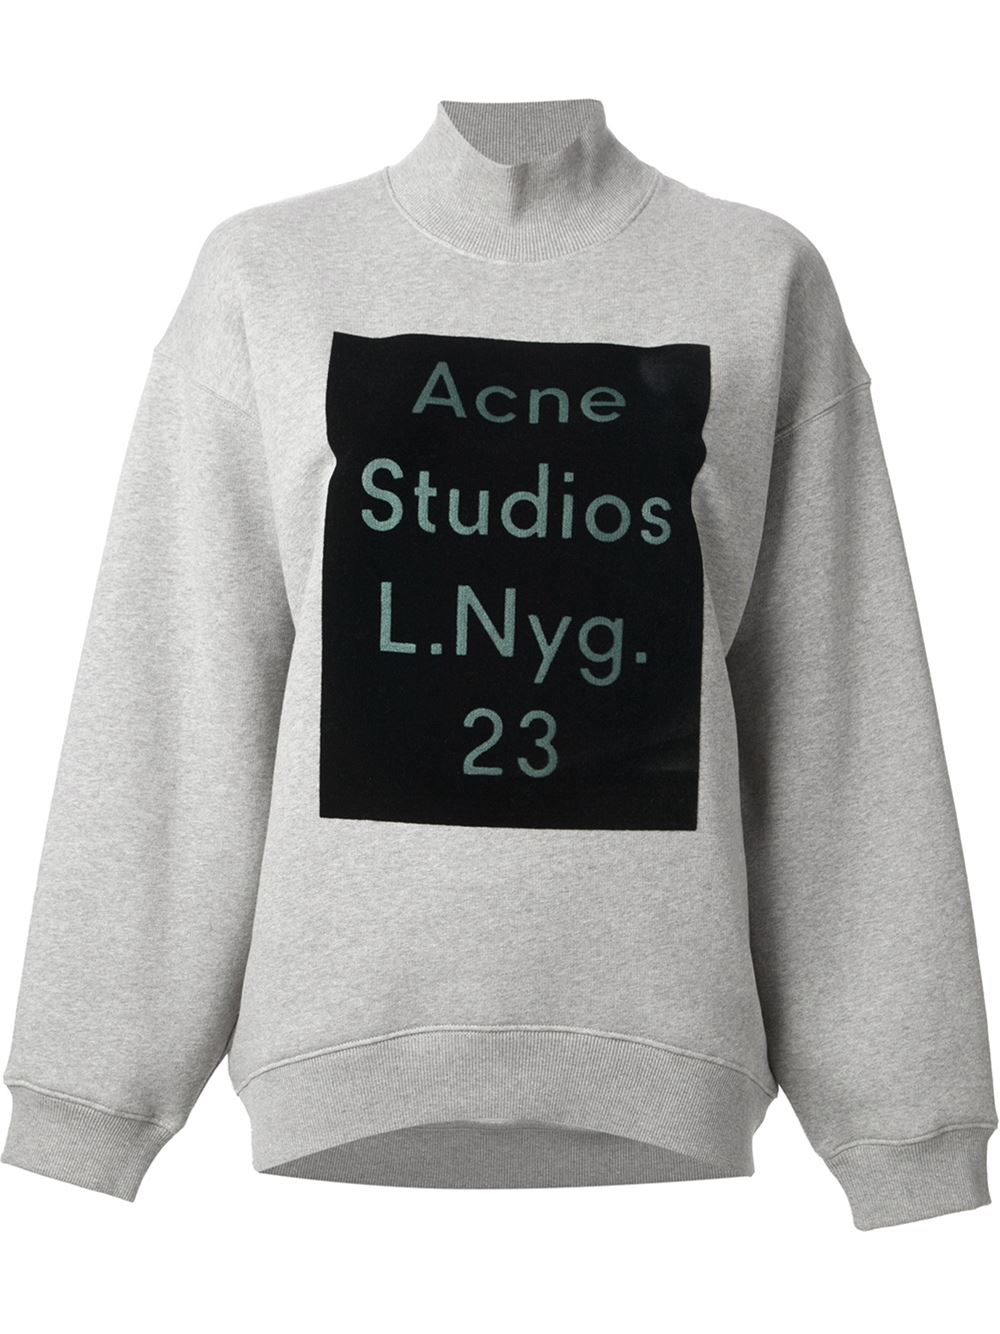 Lyst - Acne Studios Beta Flock Oversized Turtle Neck Sweatshirt in Gray